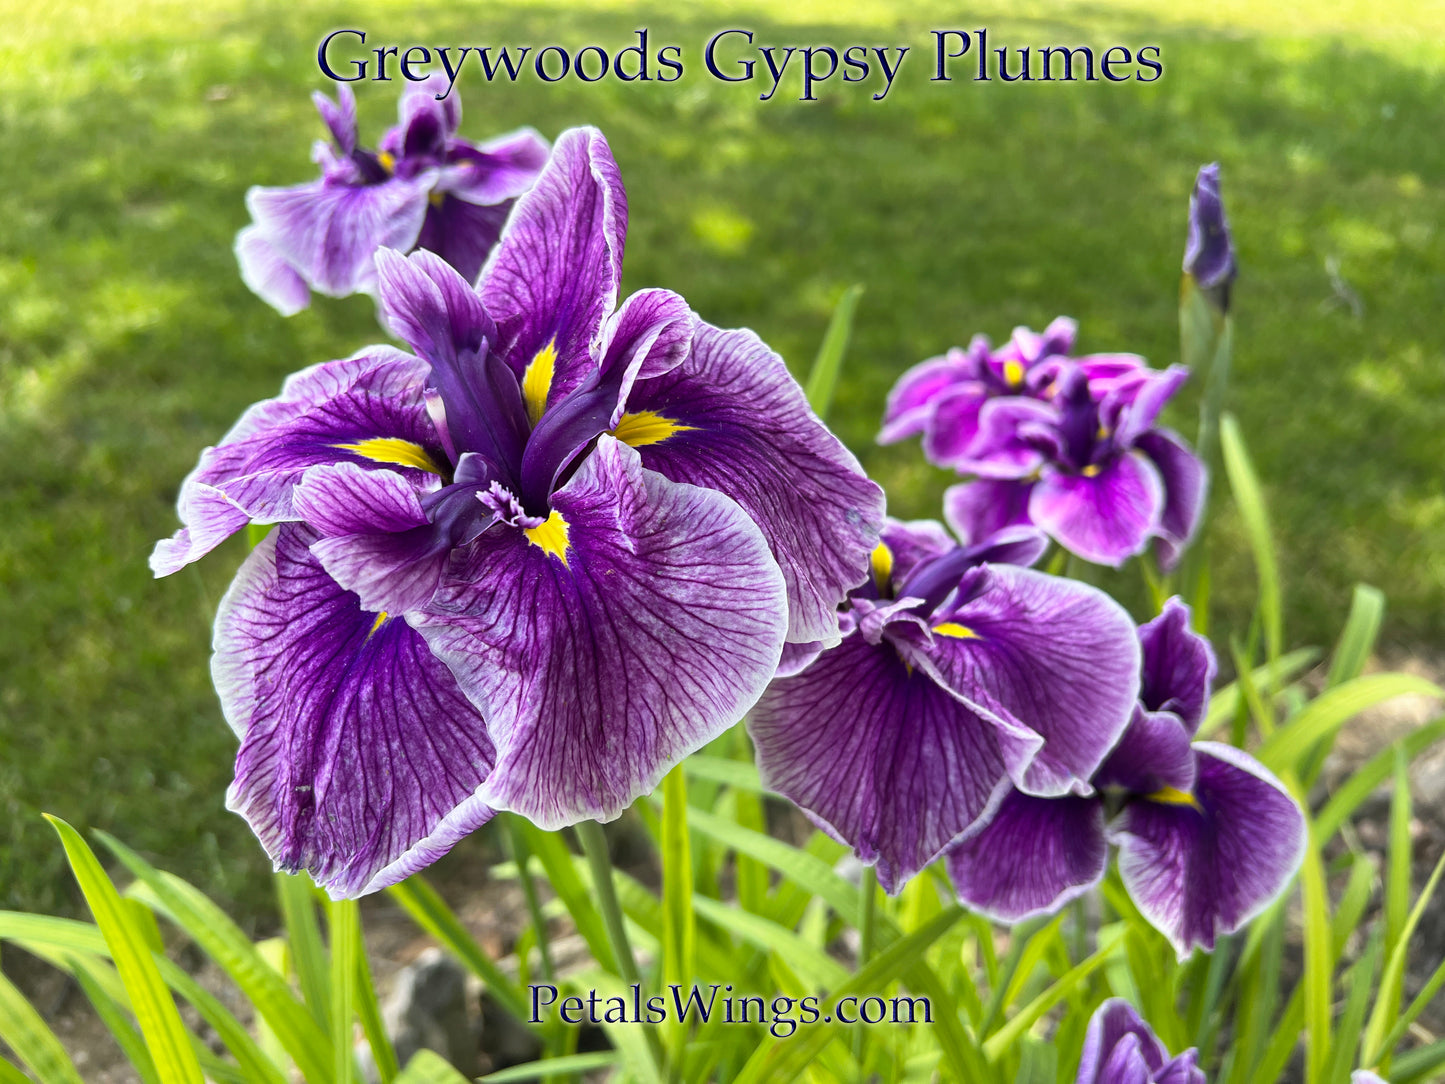 Greywoods Gypsy Plumes - 2003 Ensata Japanese Iris